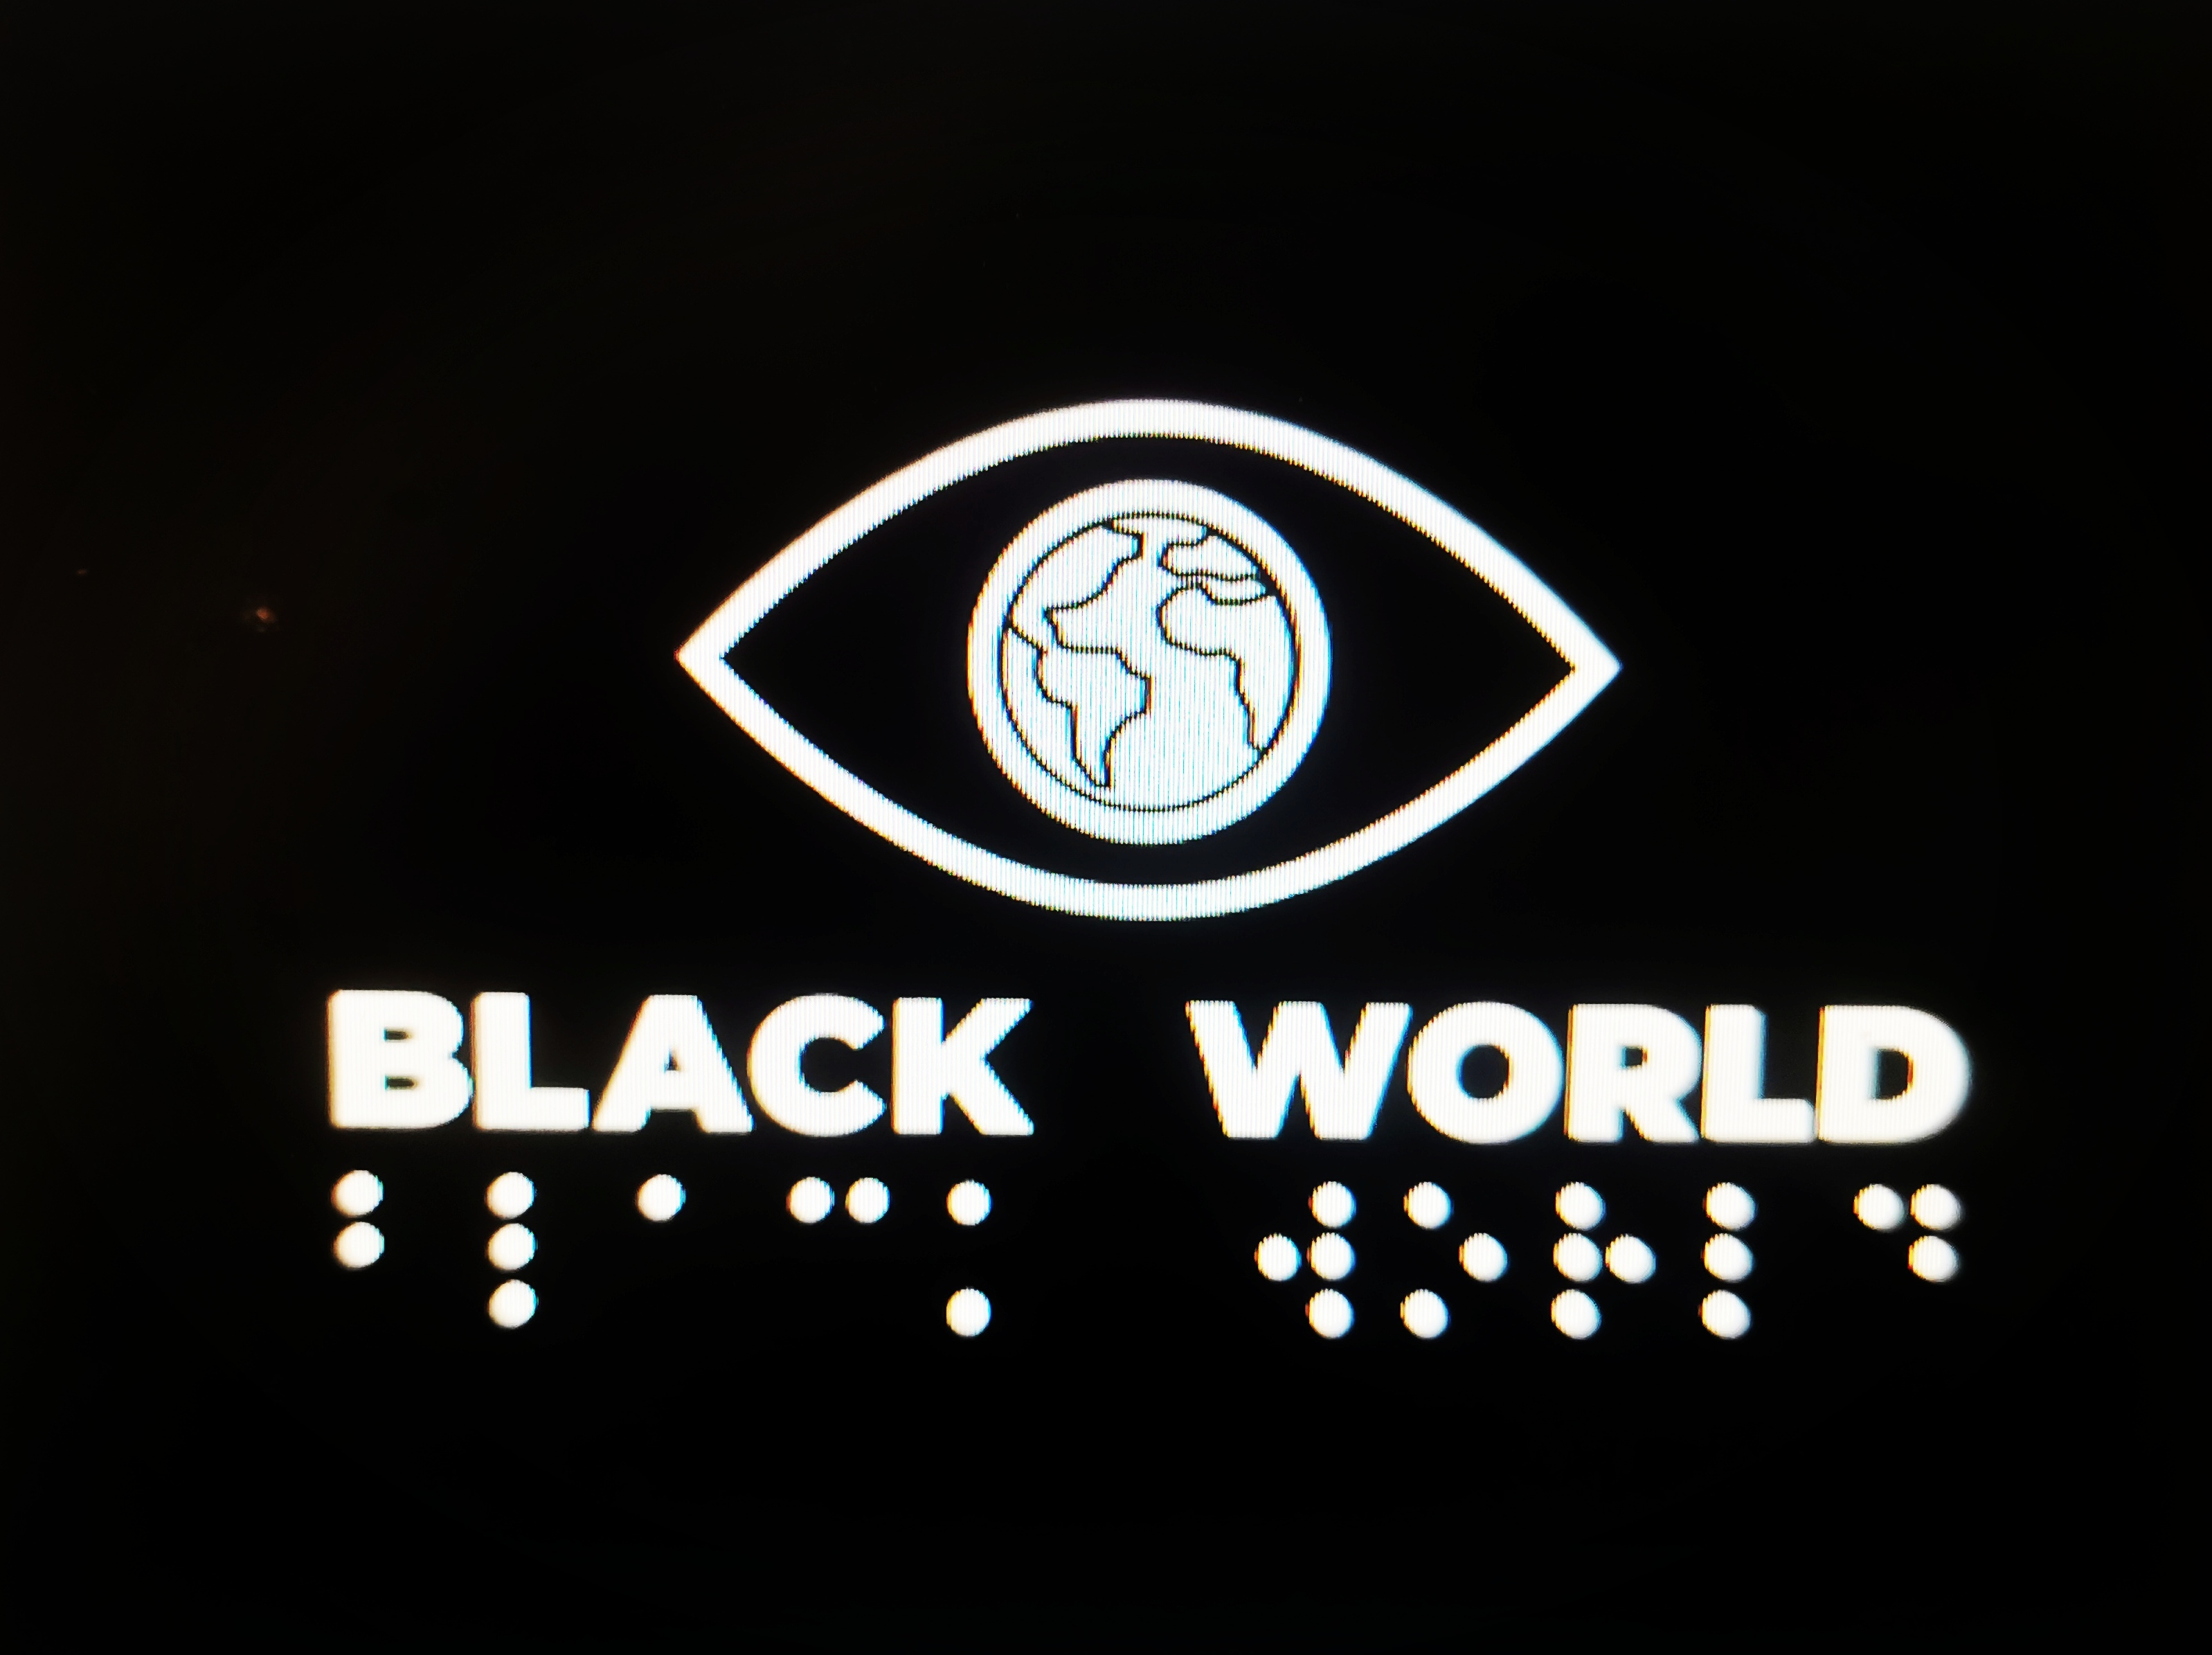 BLACK WORLD